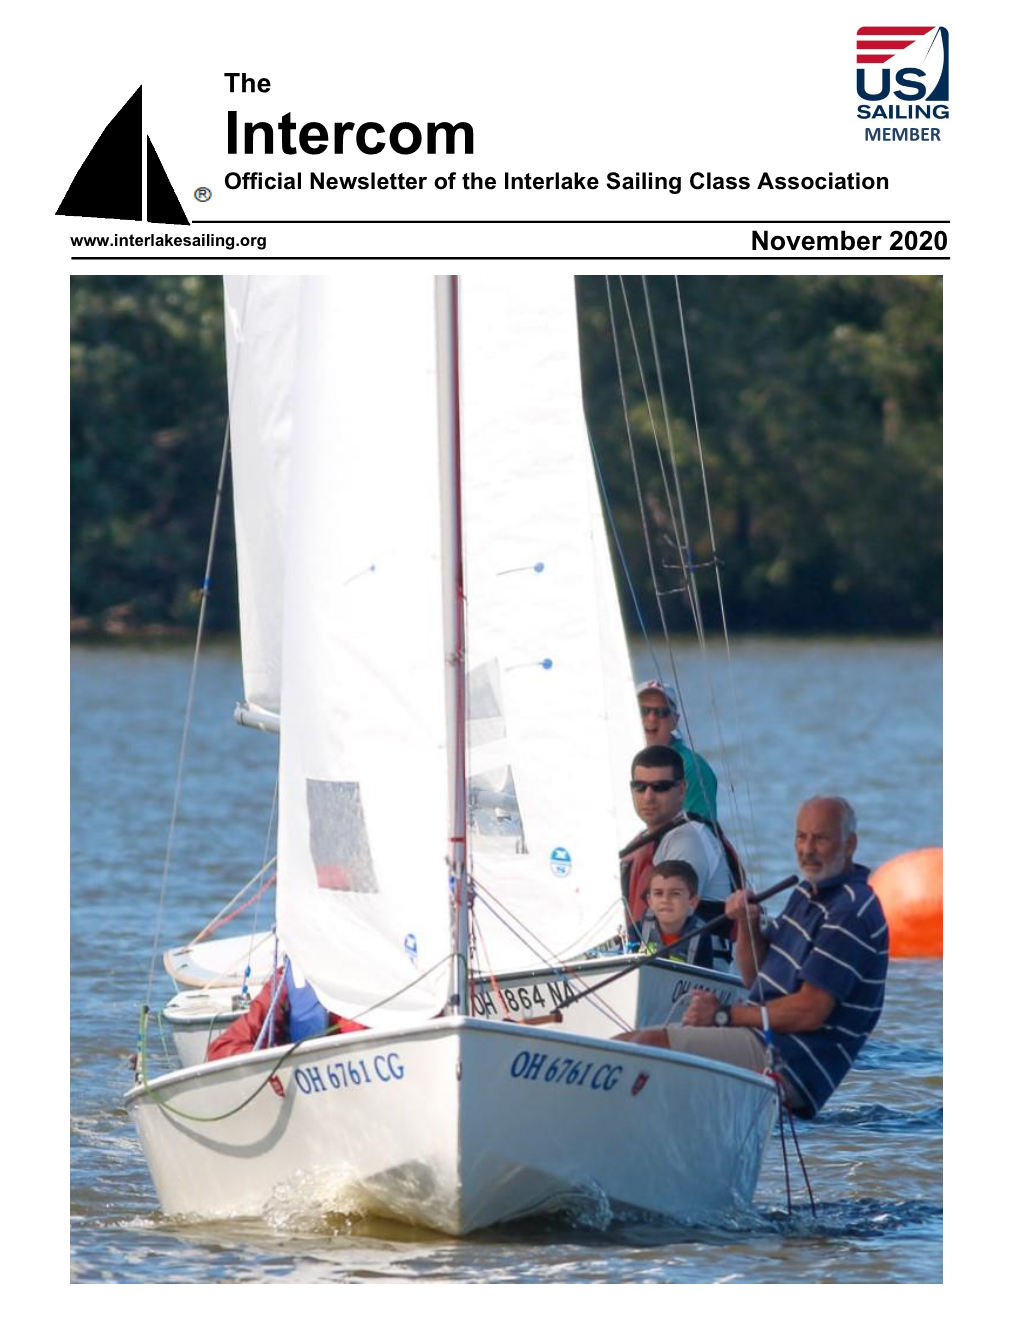 Intercom MEMBER Official Newsletter of the Interlake Sailing Class Association November 2020